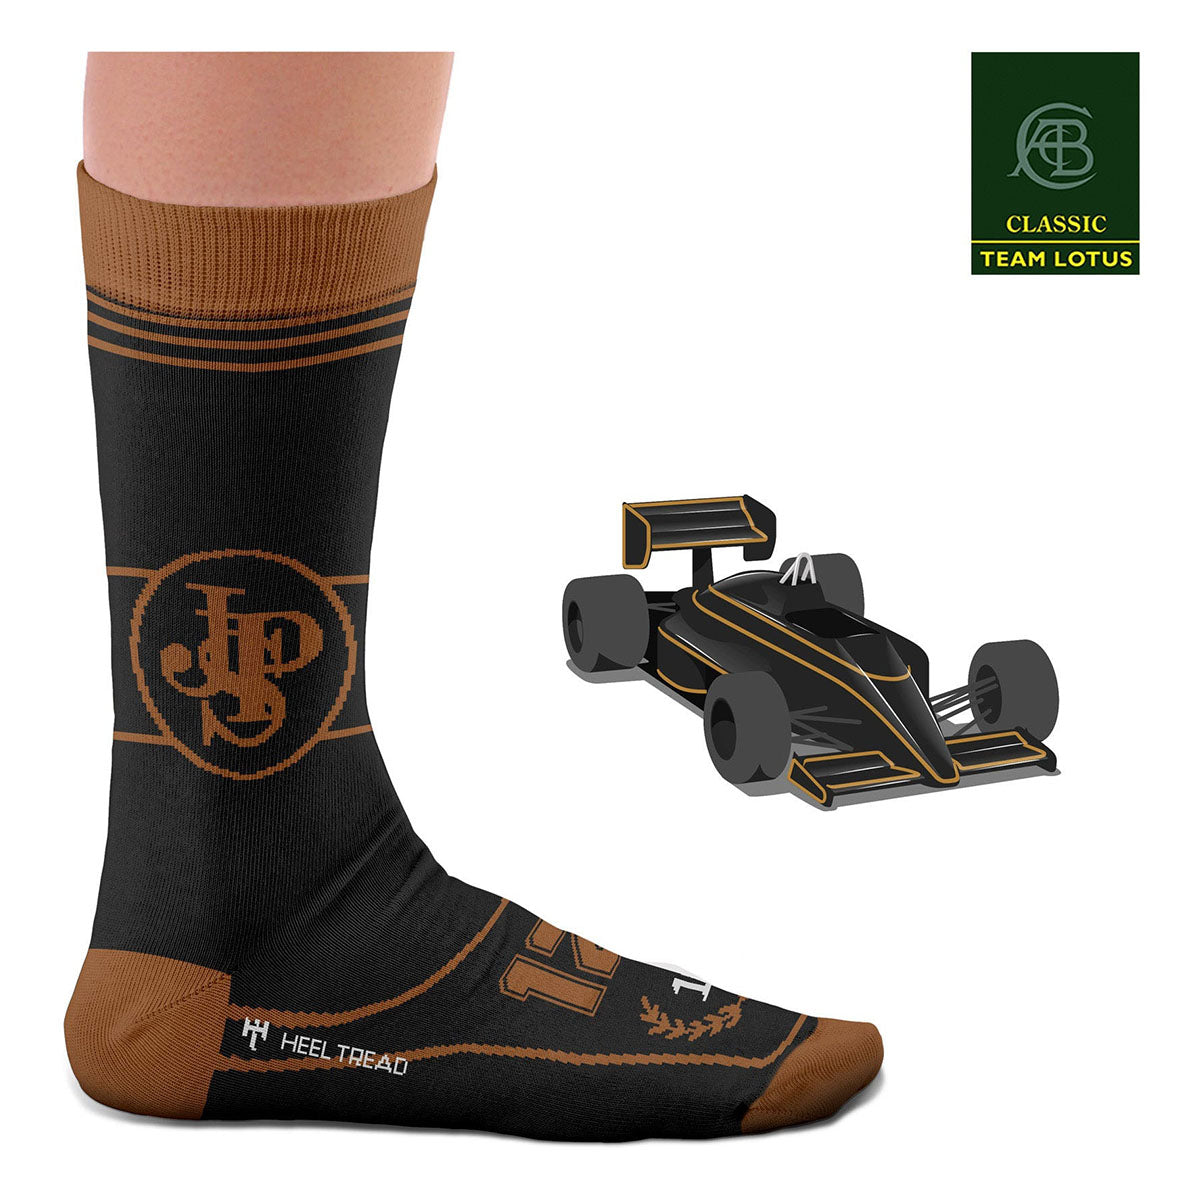 Lotus 97T JPS Socks